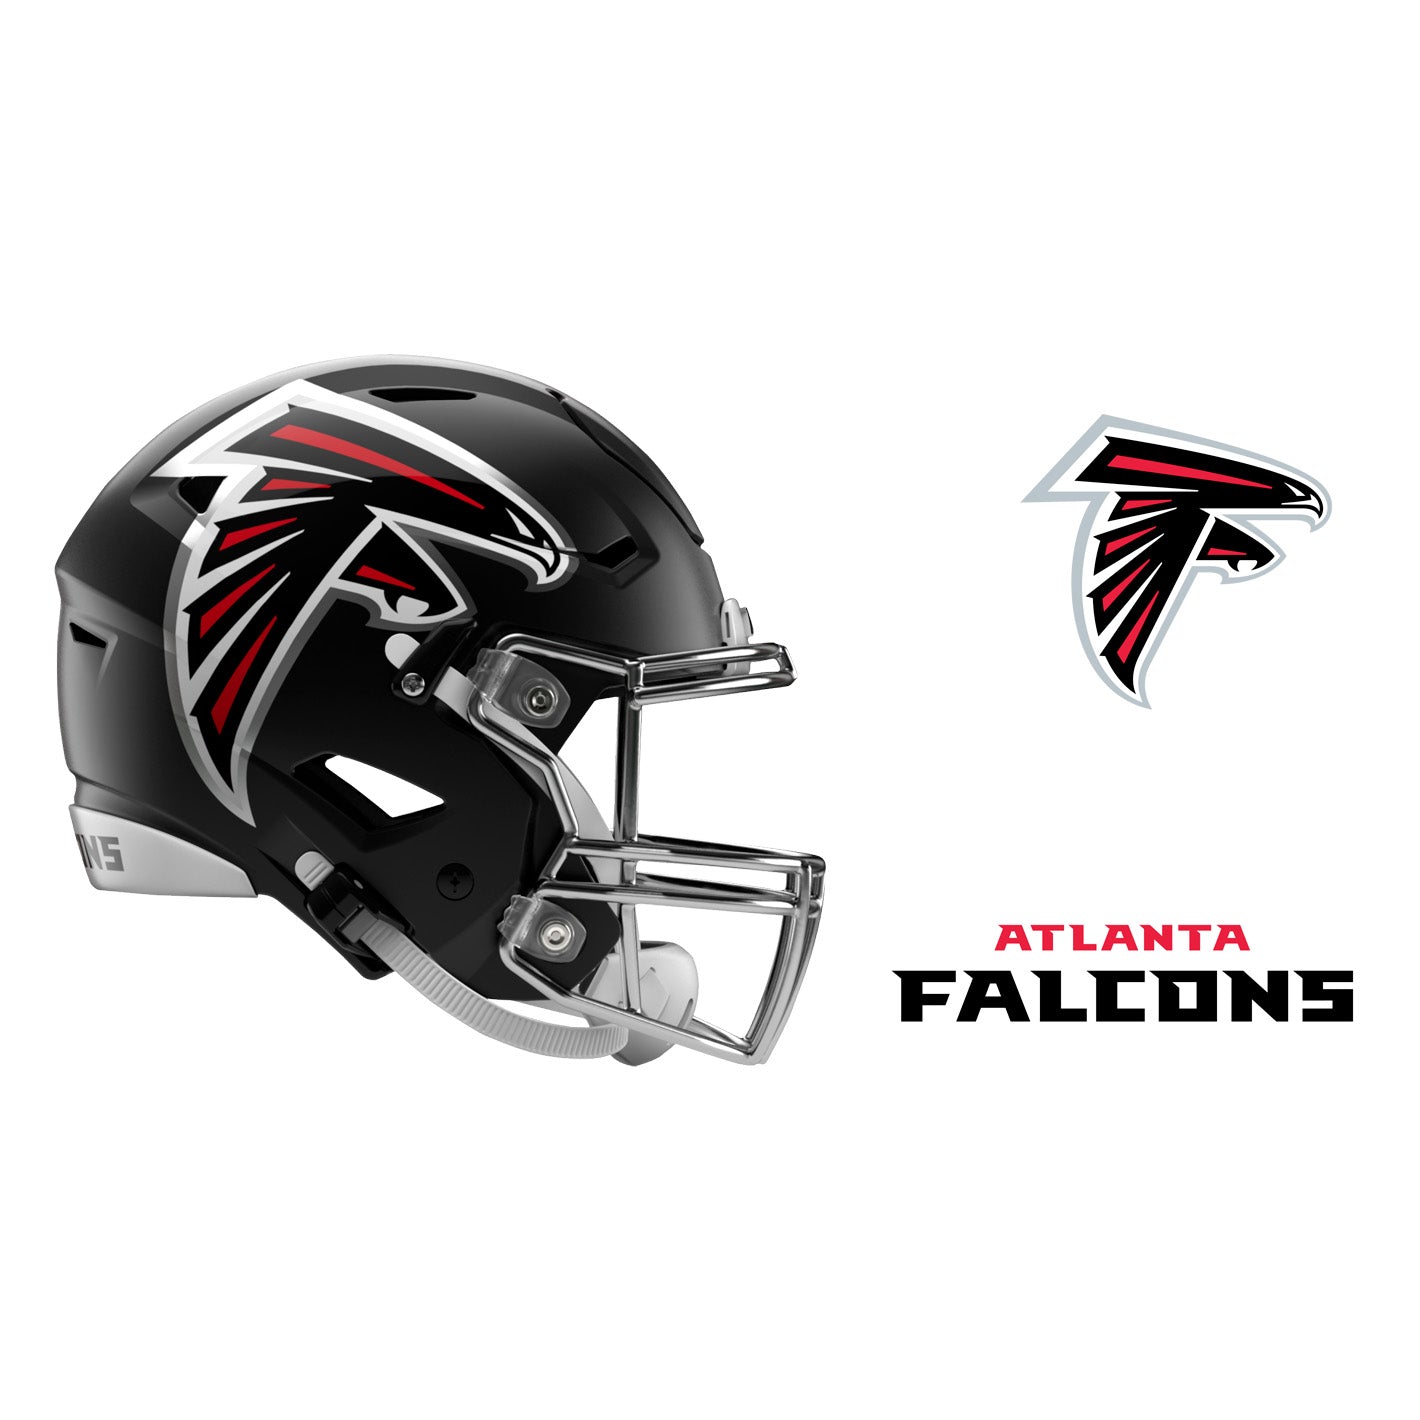 Atlanta Falcons: 2022 Helmet Officially Licensed NFL